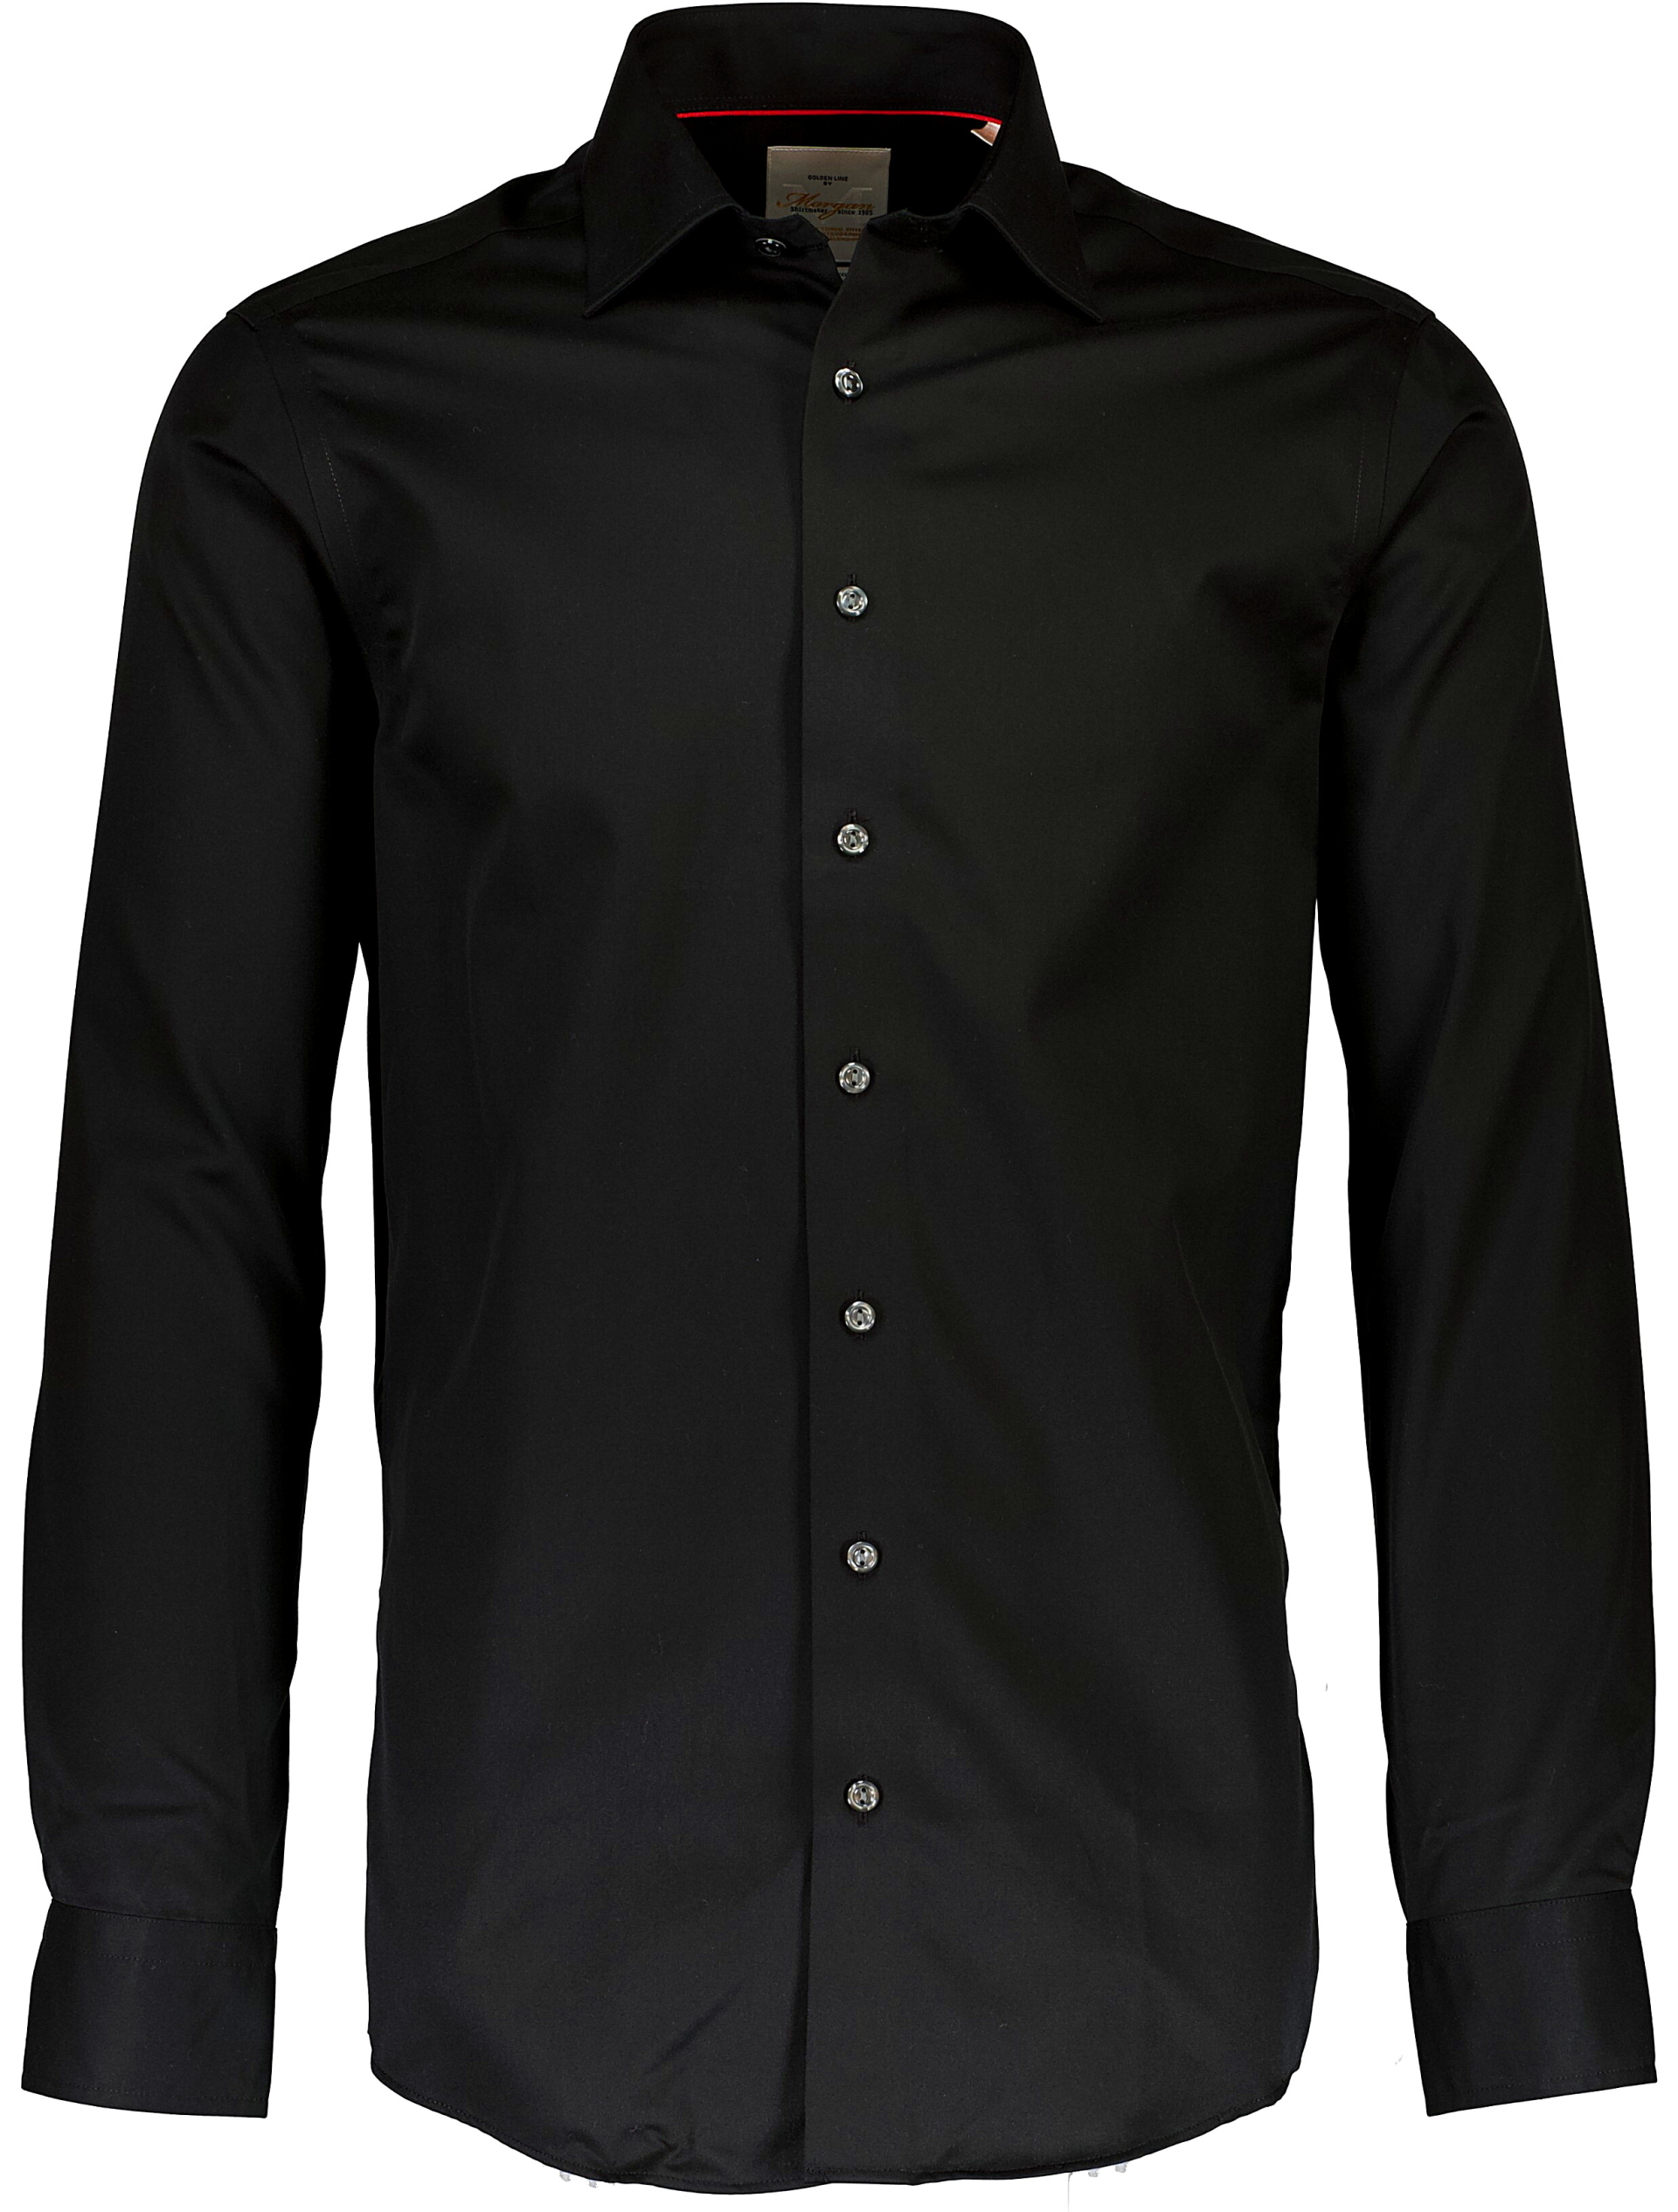 Morgan Business skjorte sort / black